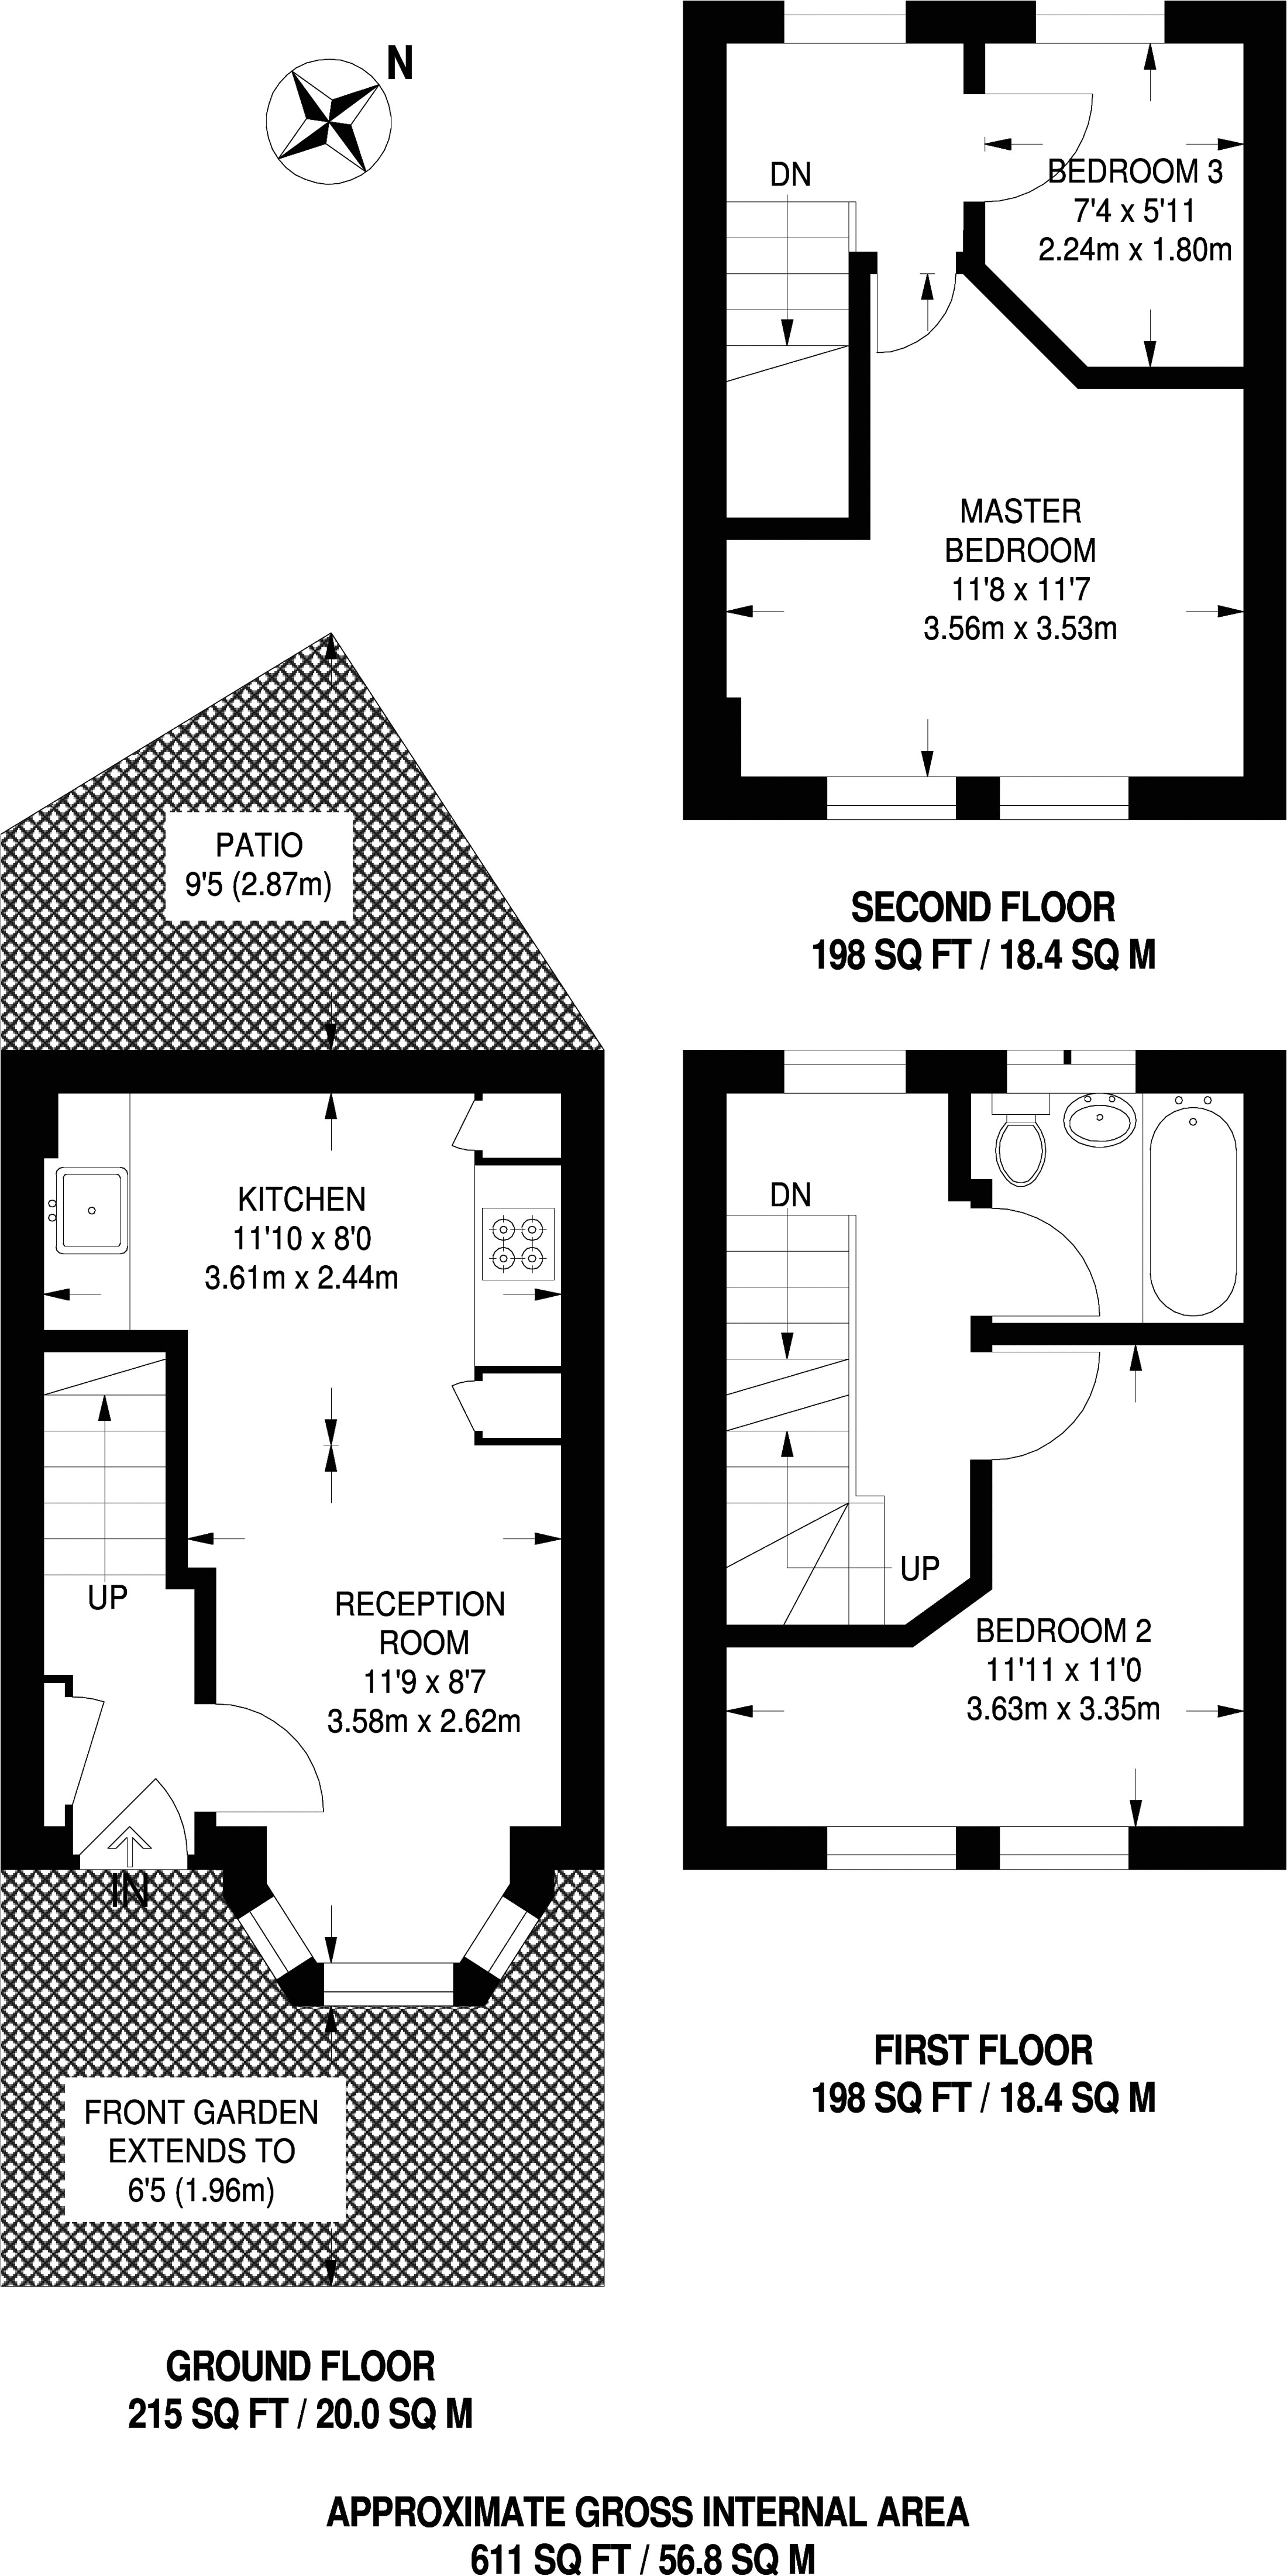 9x10 bedroom layout